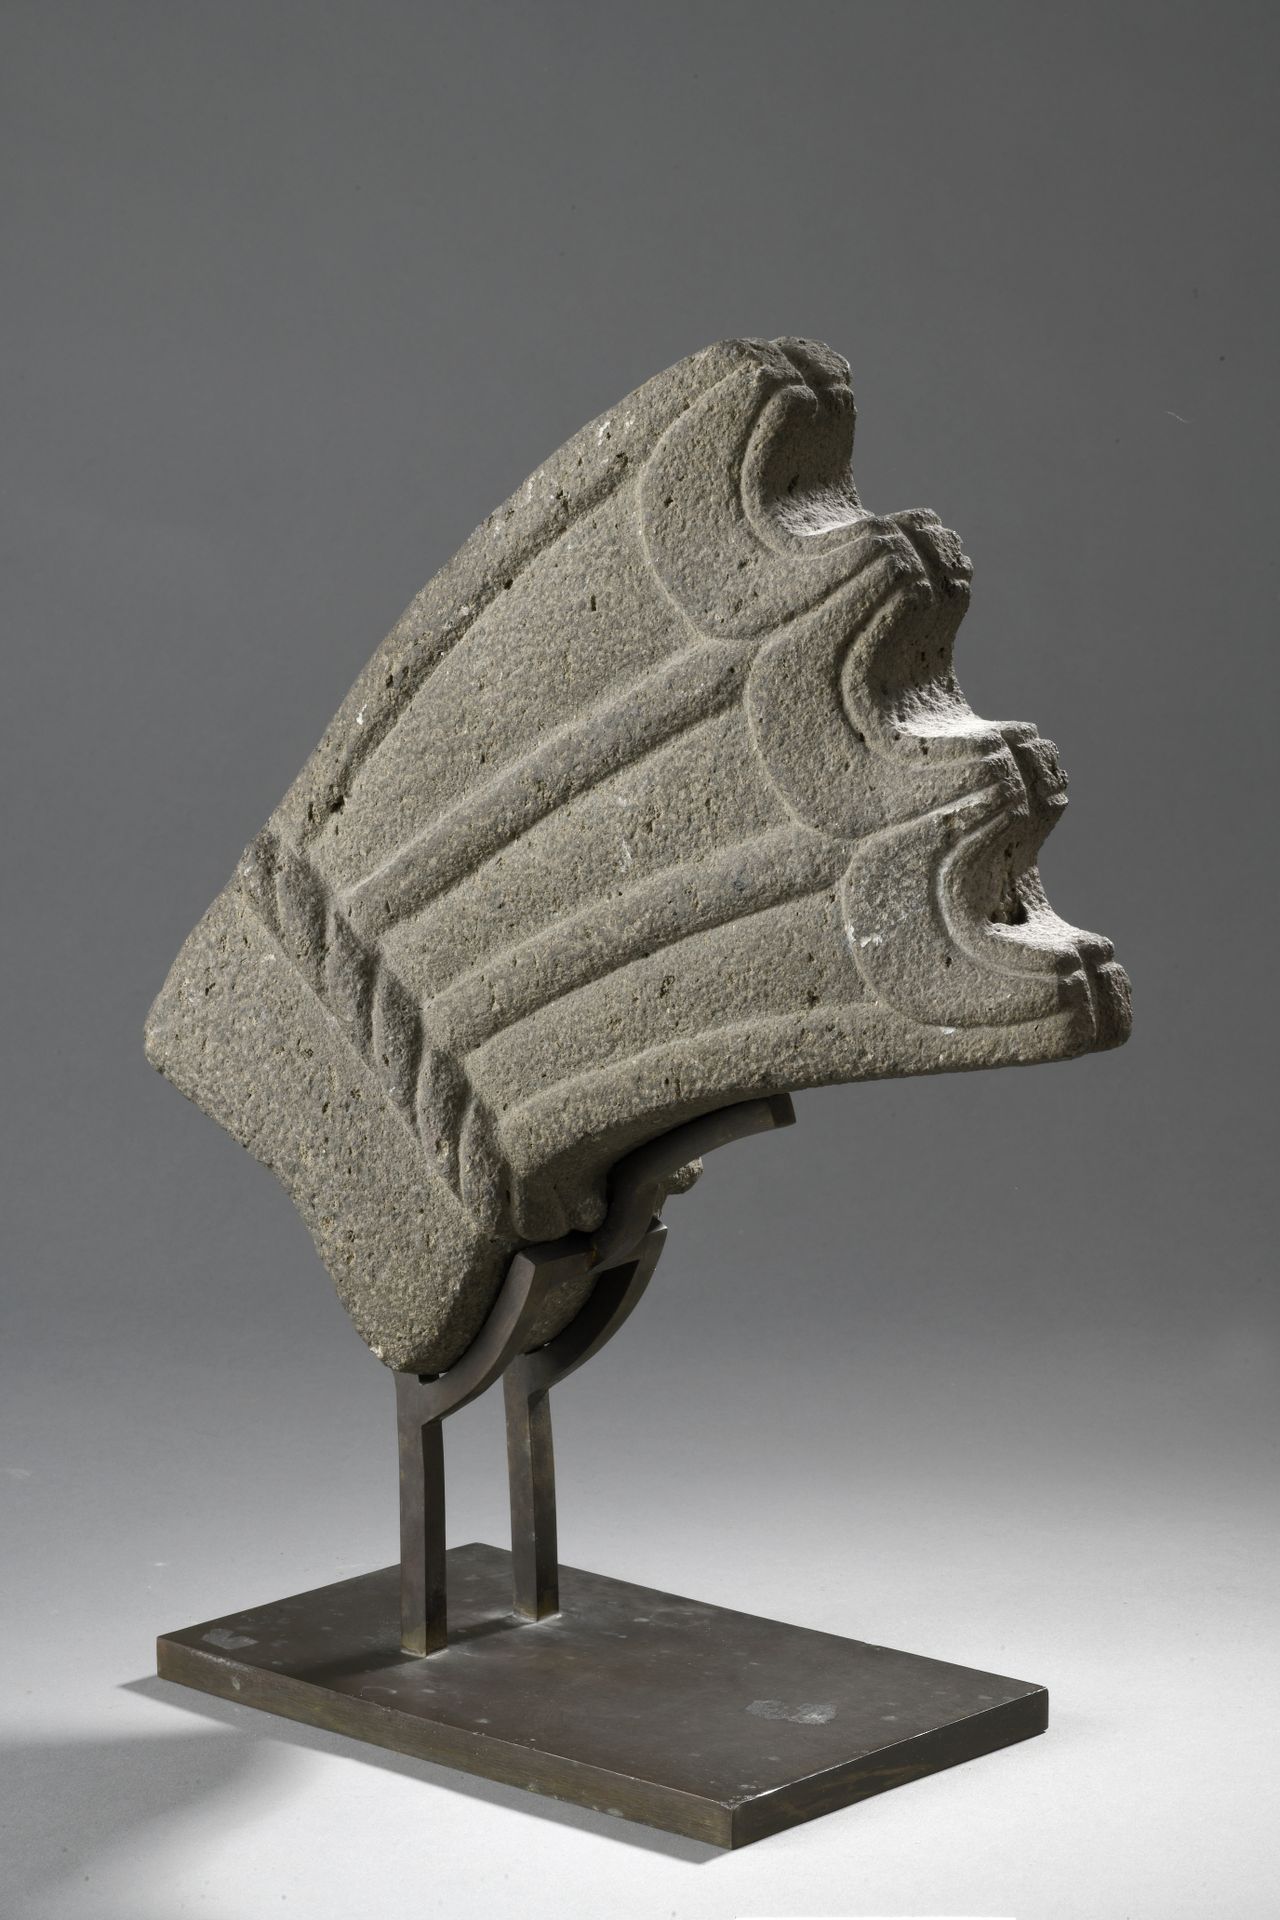 Null 代表一束羽毛的PALMA，由一根绳索固定在一起。
灰色火山石。
韦拉克鲁斯文化，墨西哥
古典时期，公元450-750年
H.26 - L 17 cm
&hellip;